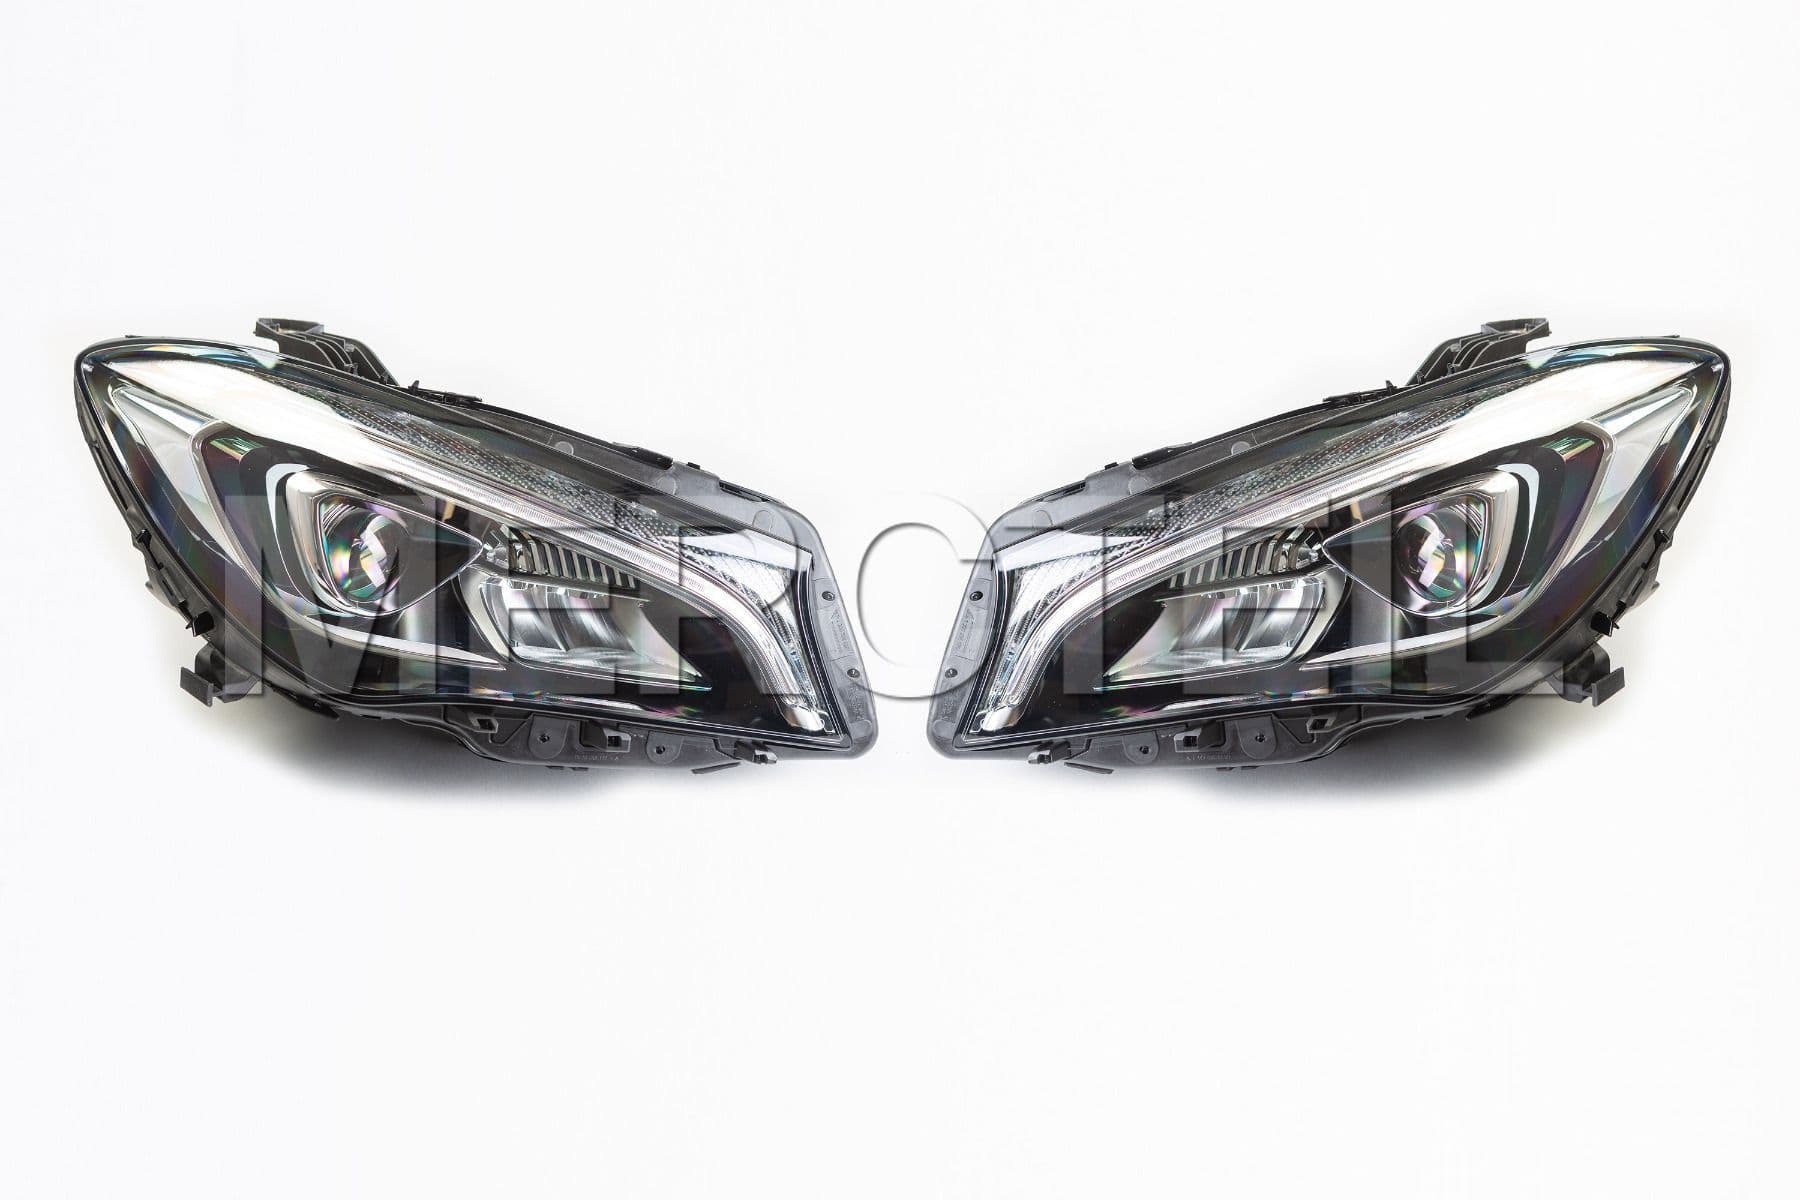 CLA Klasse LED Headlights C117 Genuine Mercedes Benz (part number: A1179060001)